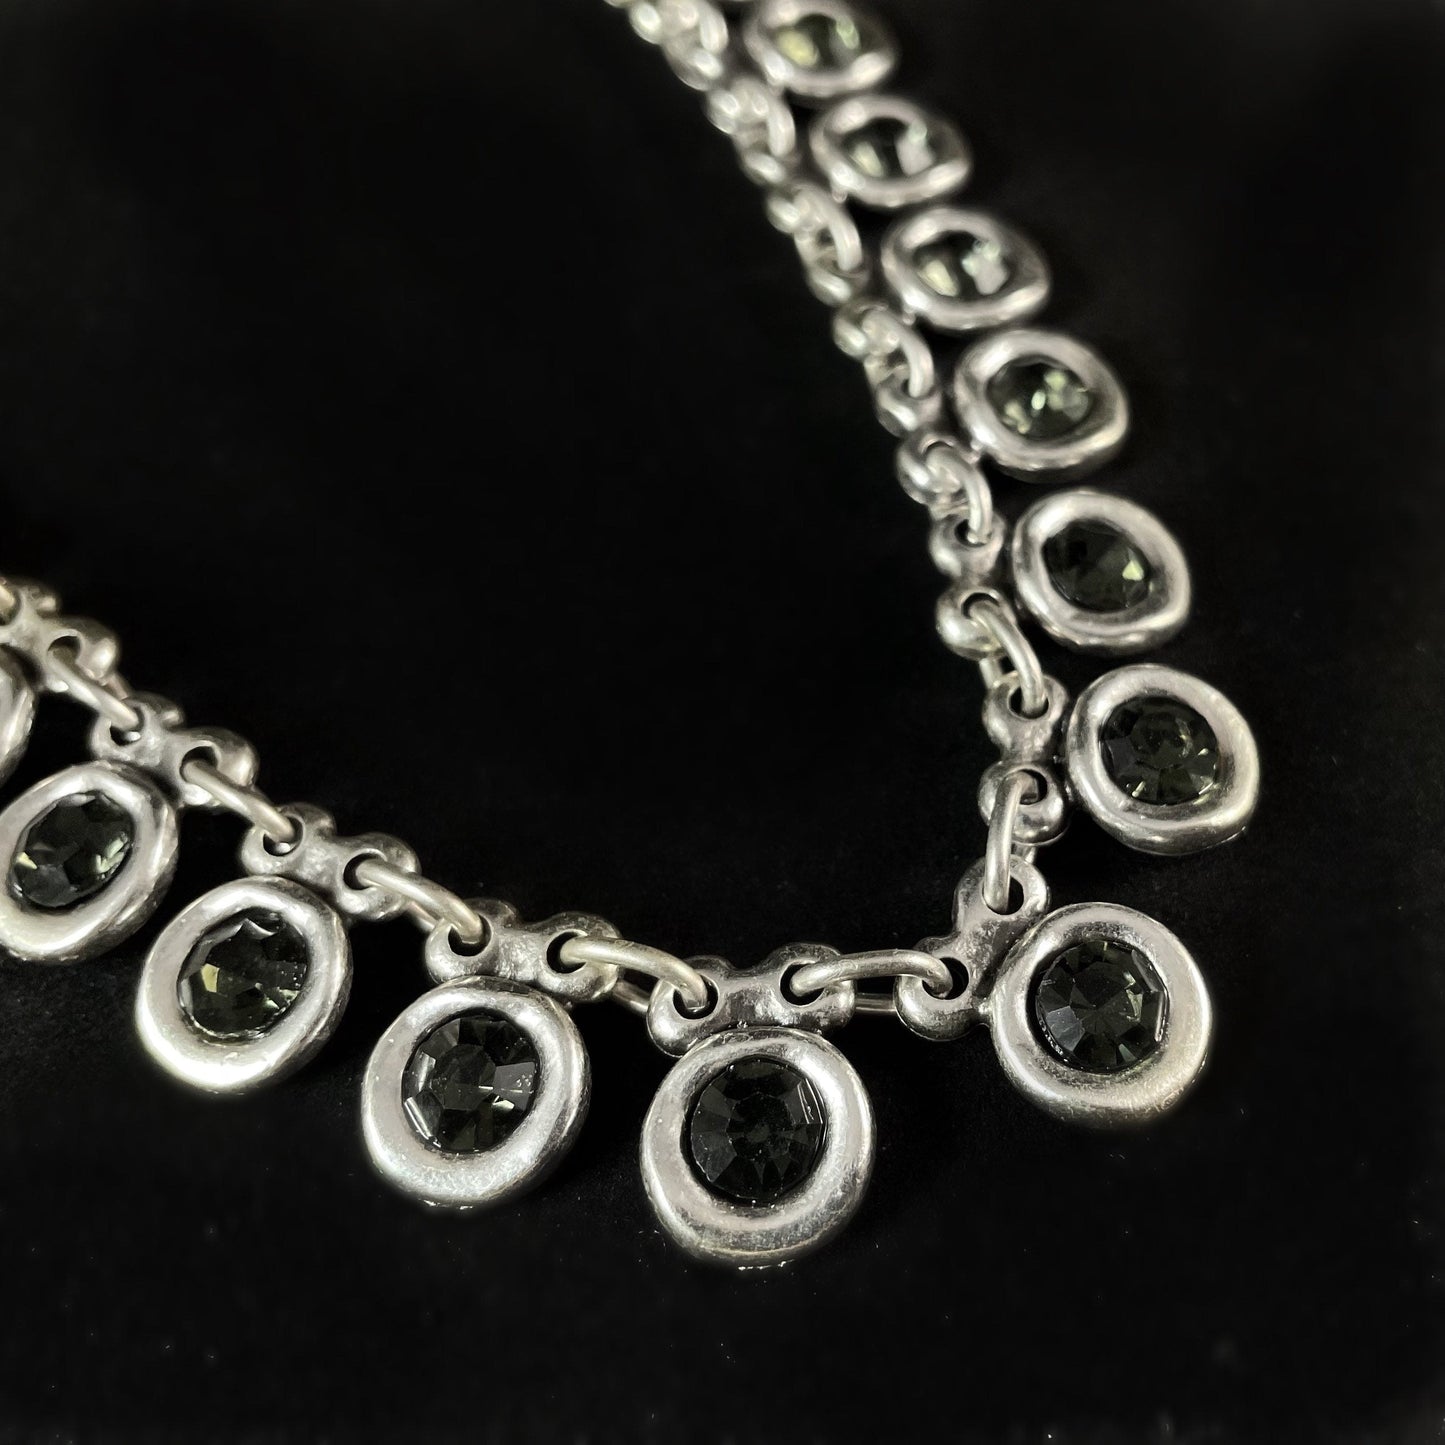 Silver Necklace with Gray Crystals, Handmade, Nickel Free